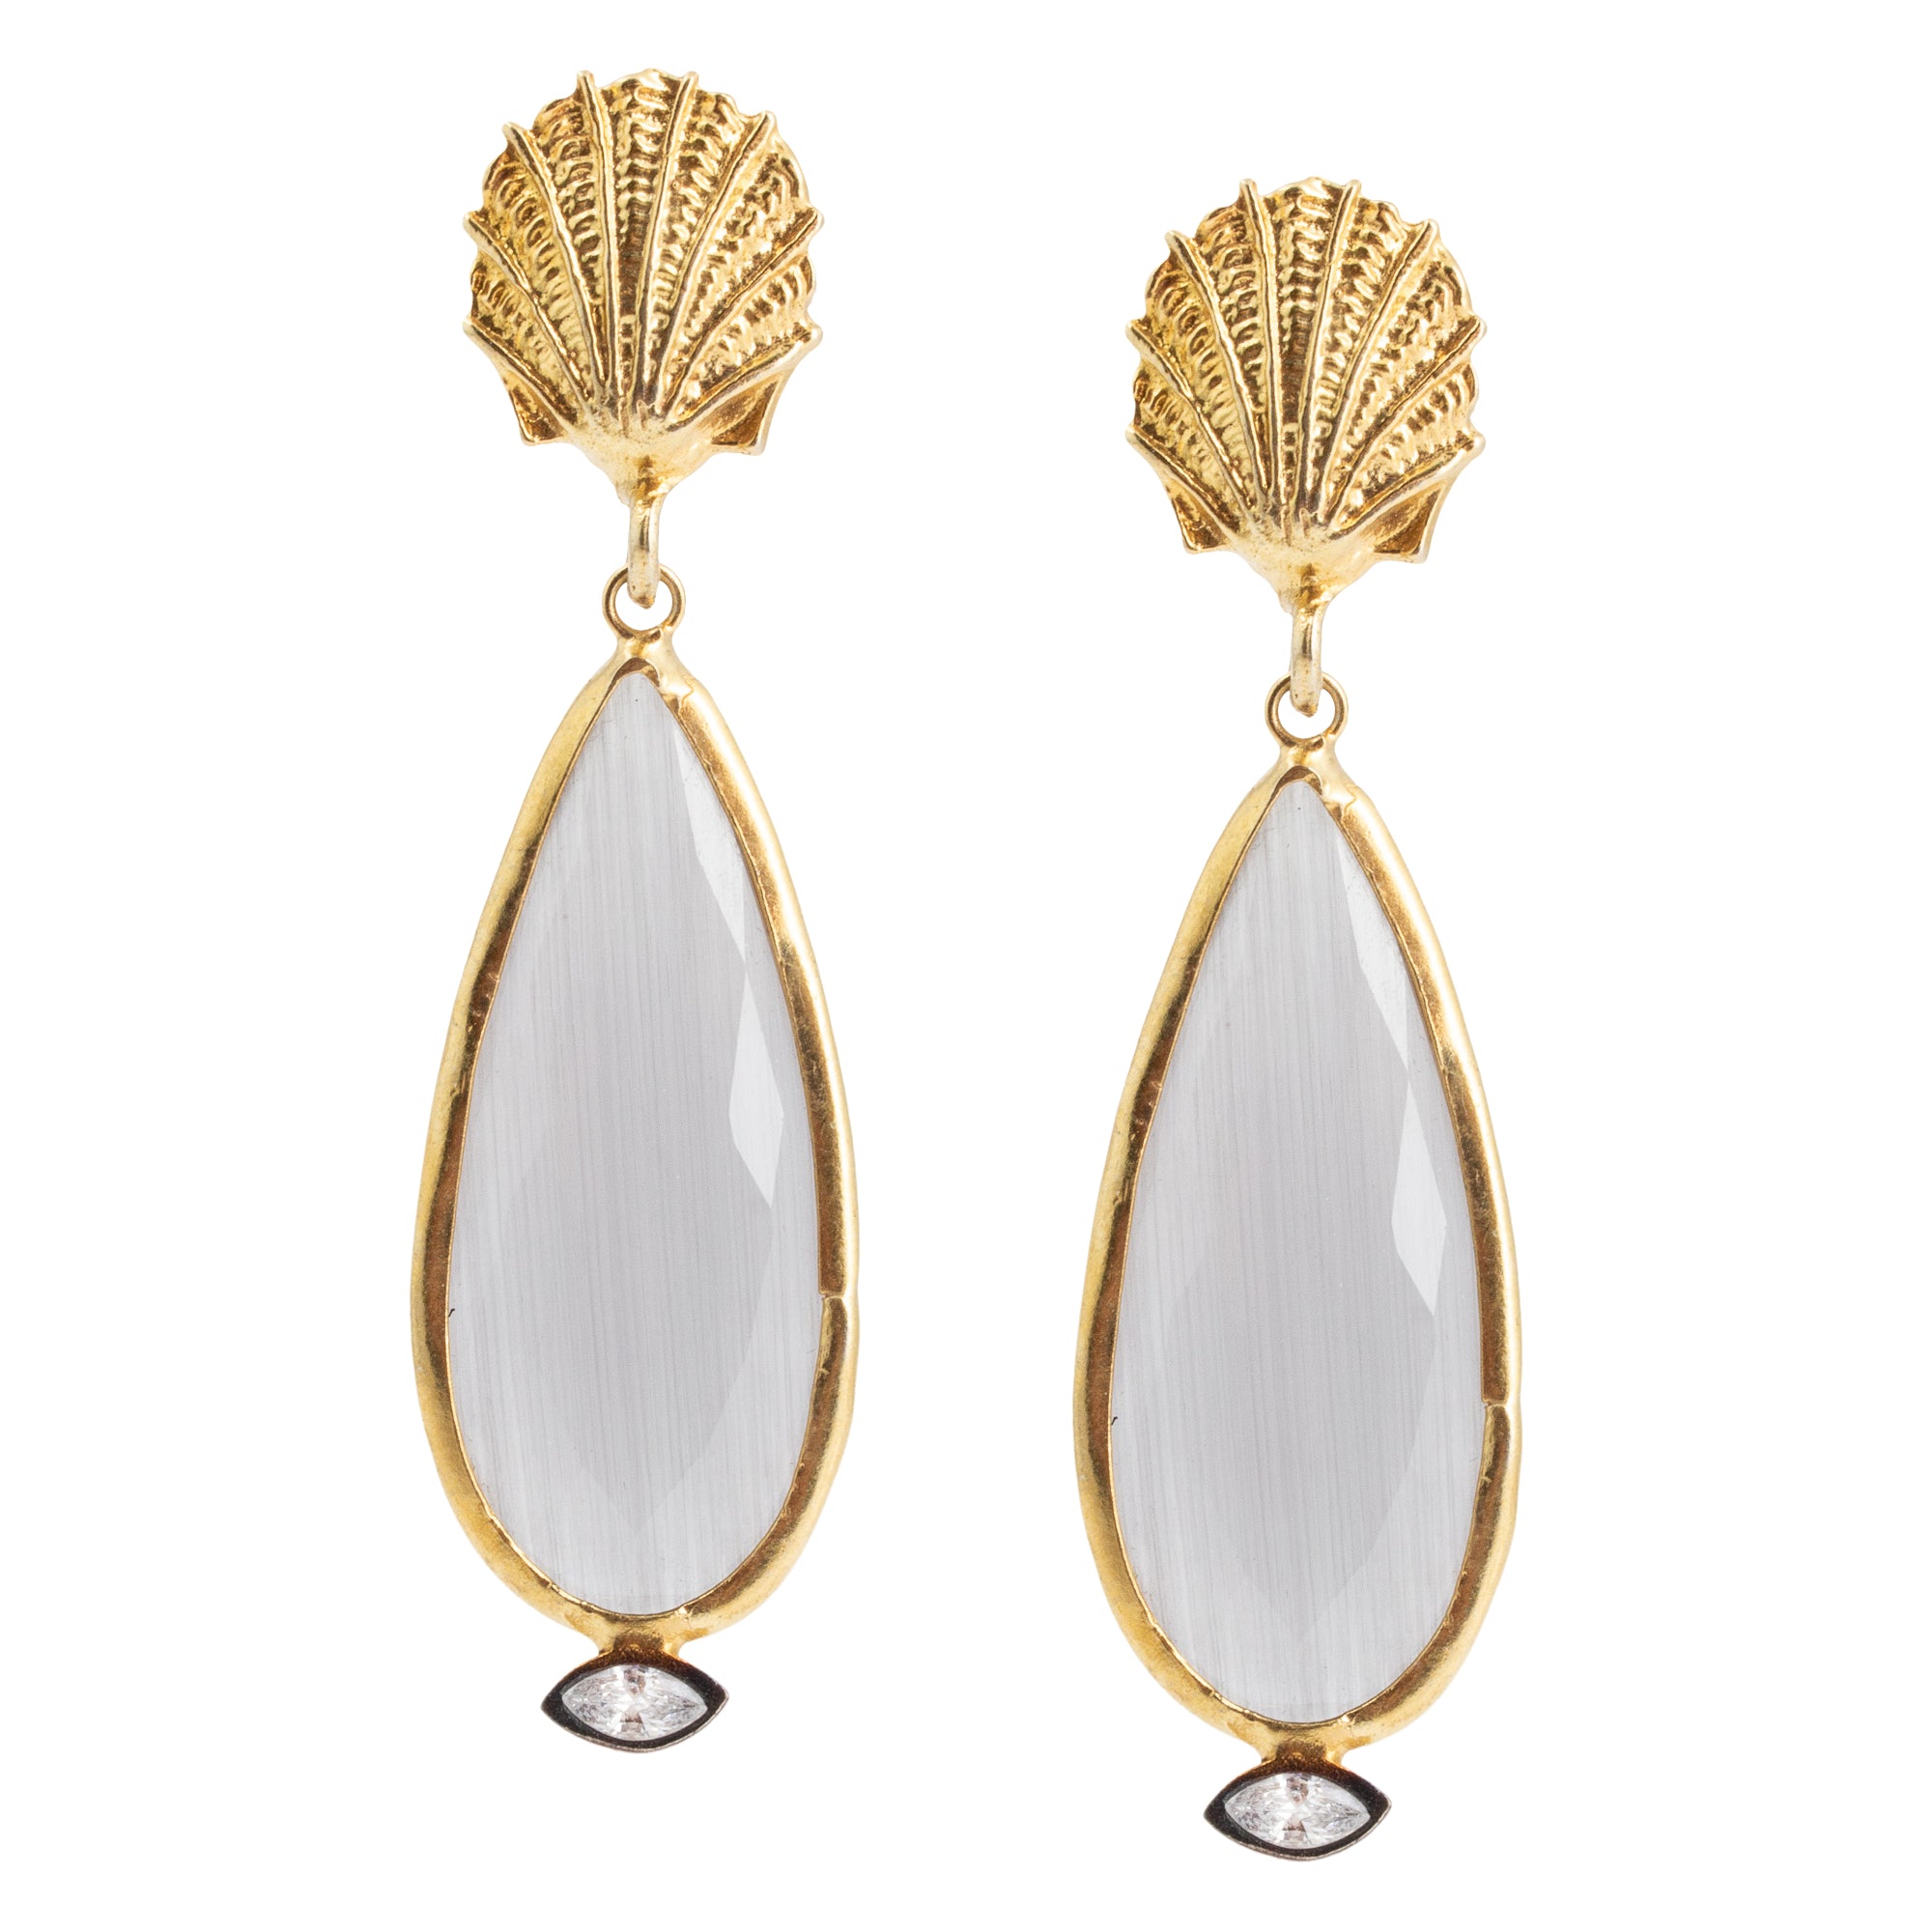 Handcrafted antiqued brass seashell drop earrings, enameled